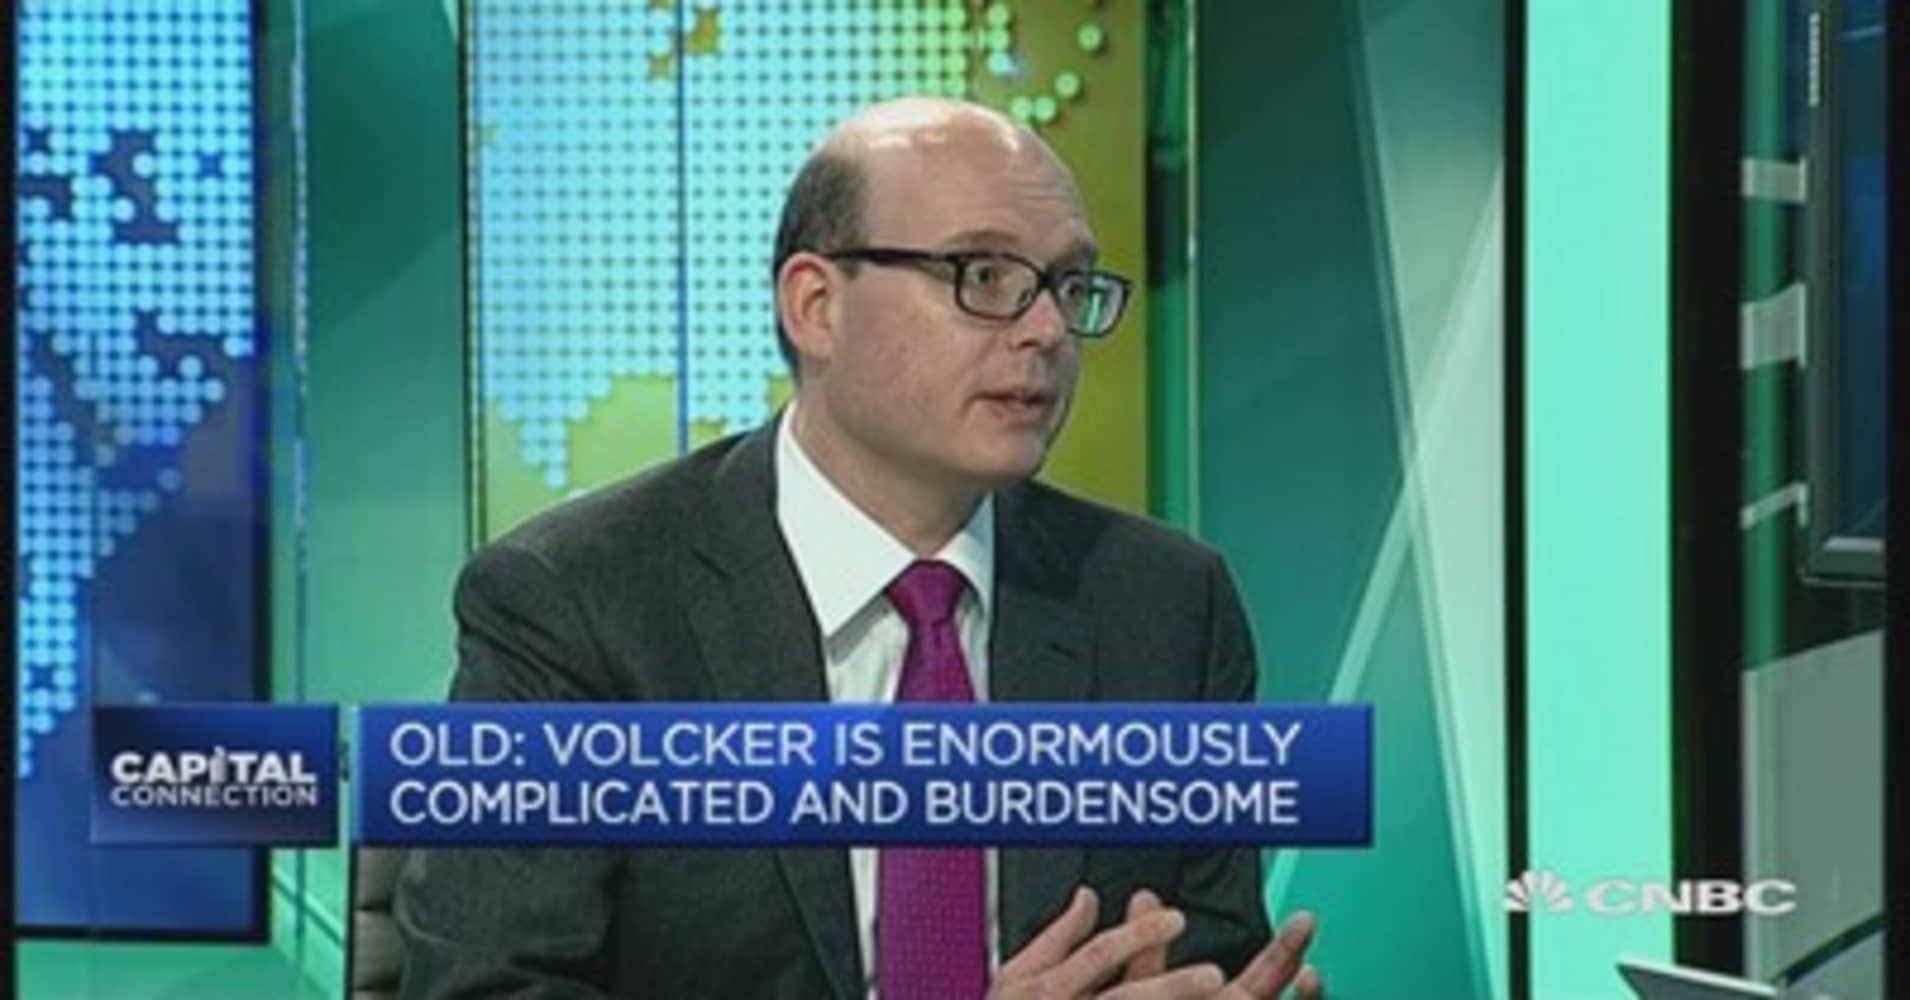 Volcker Rule has disproportionate costs: Expert